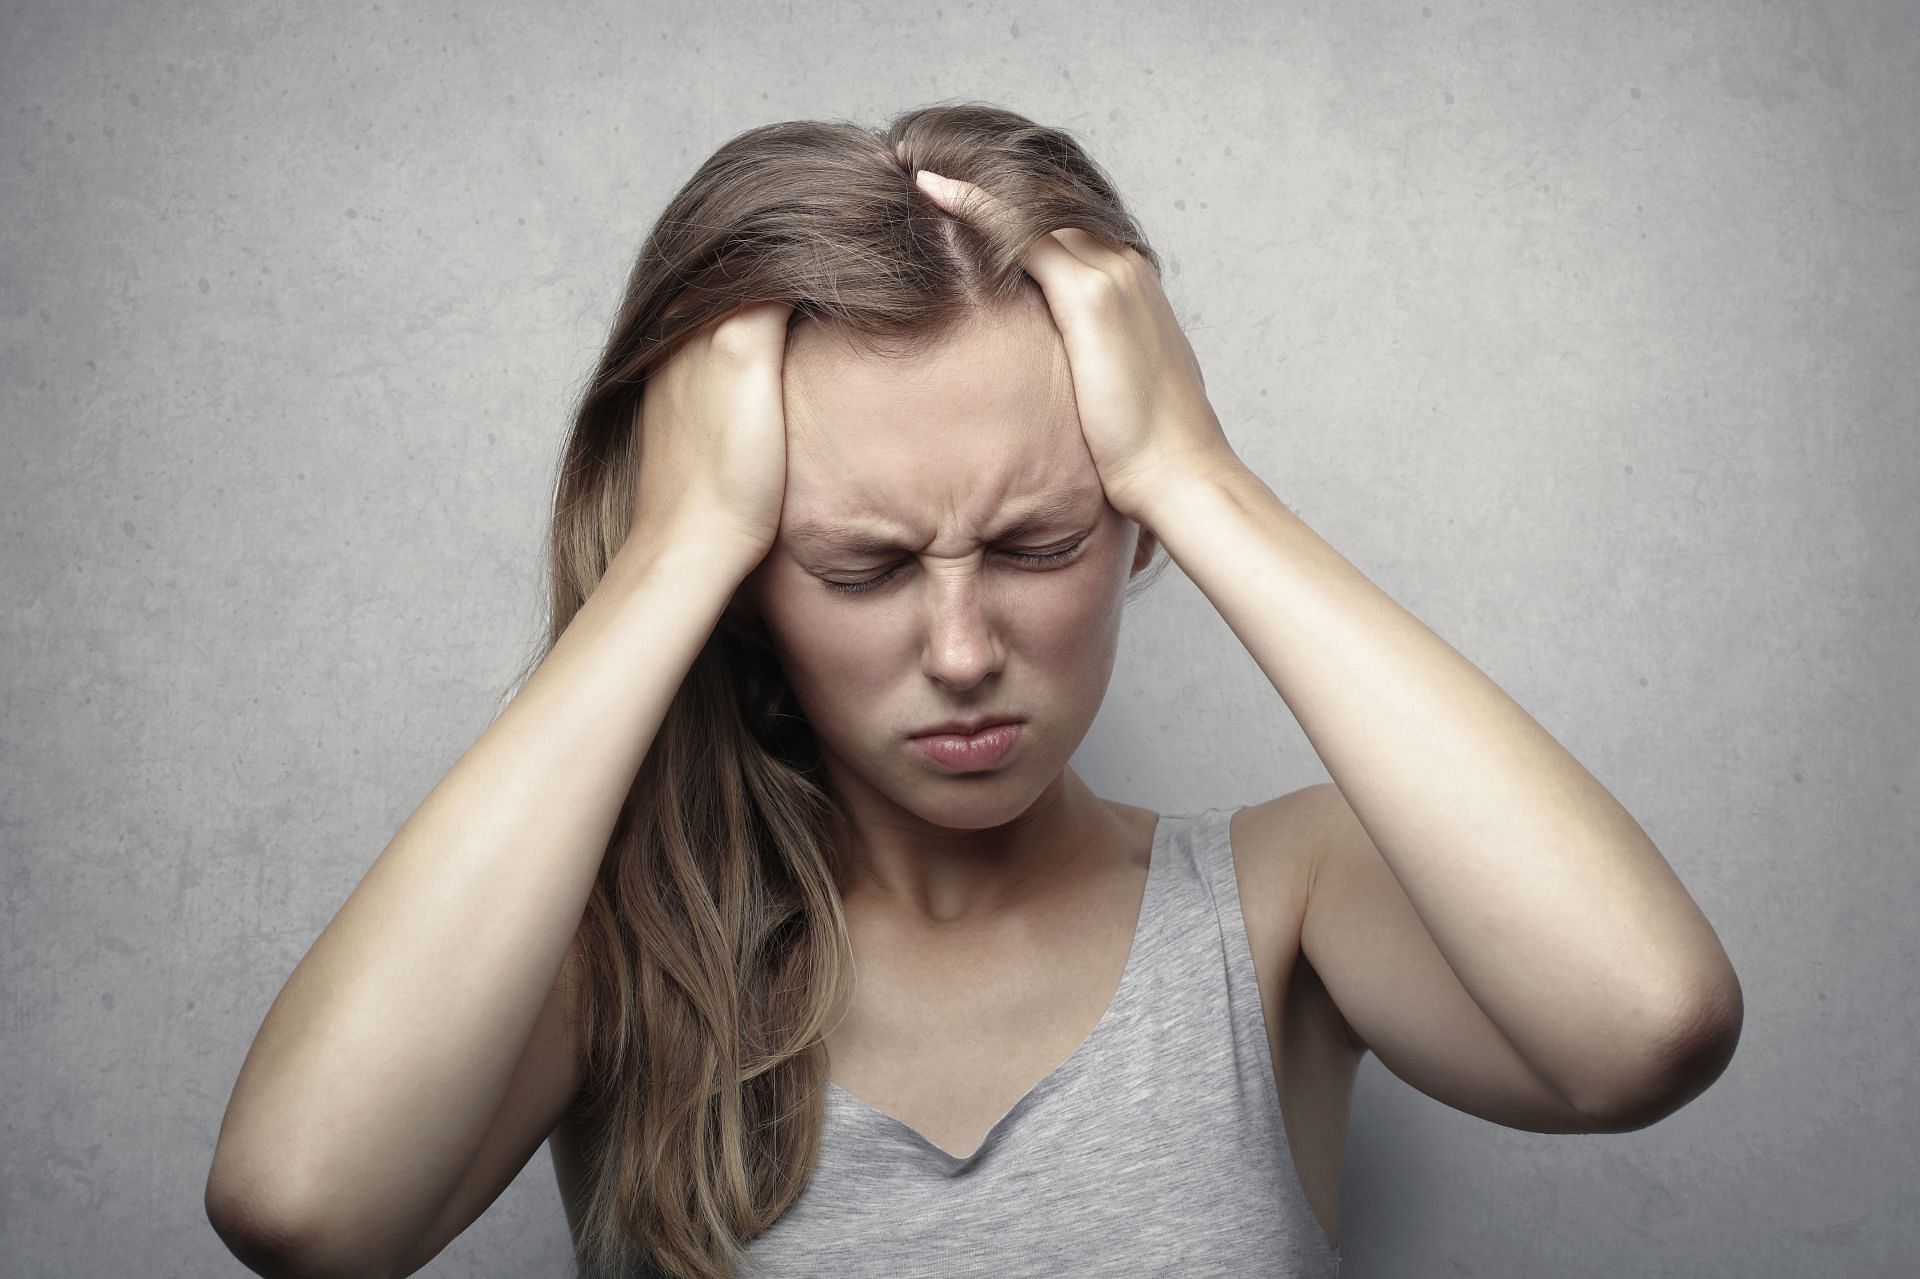 Headache is one of the common symptoms of hangover (Image via Pexels/Andrea Piacquadio)